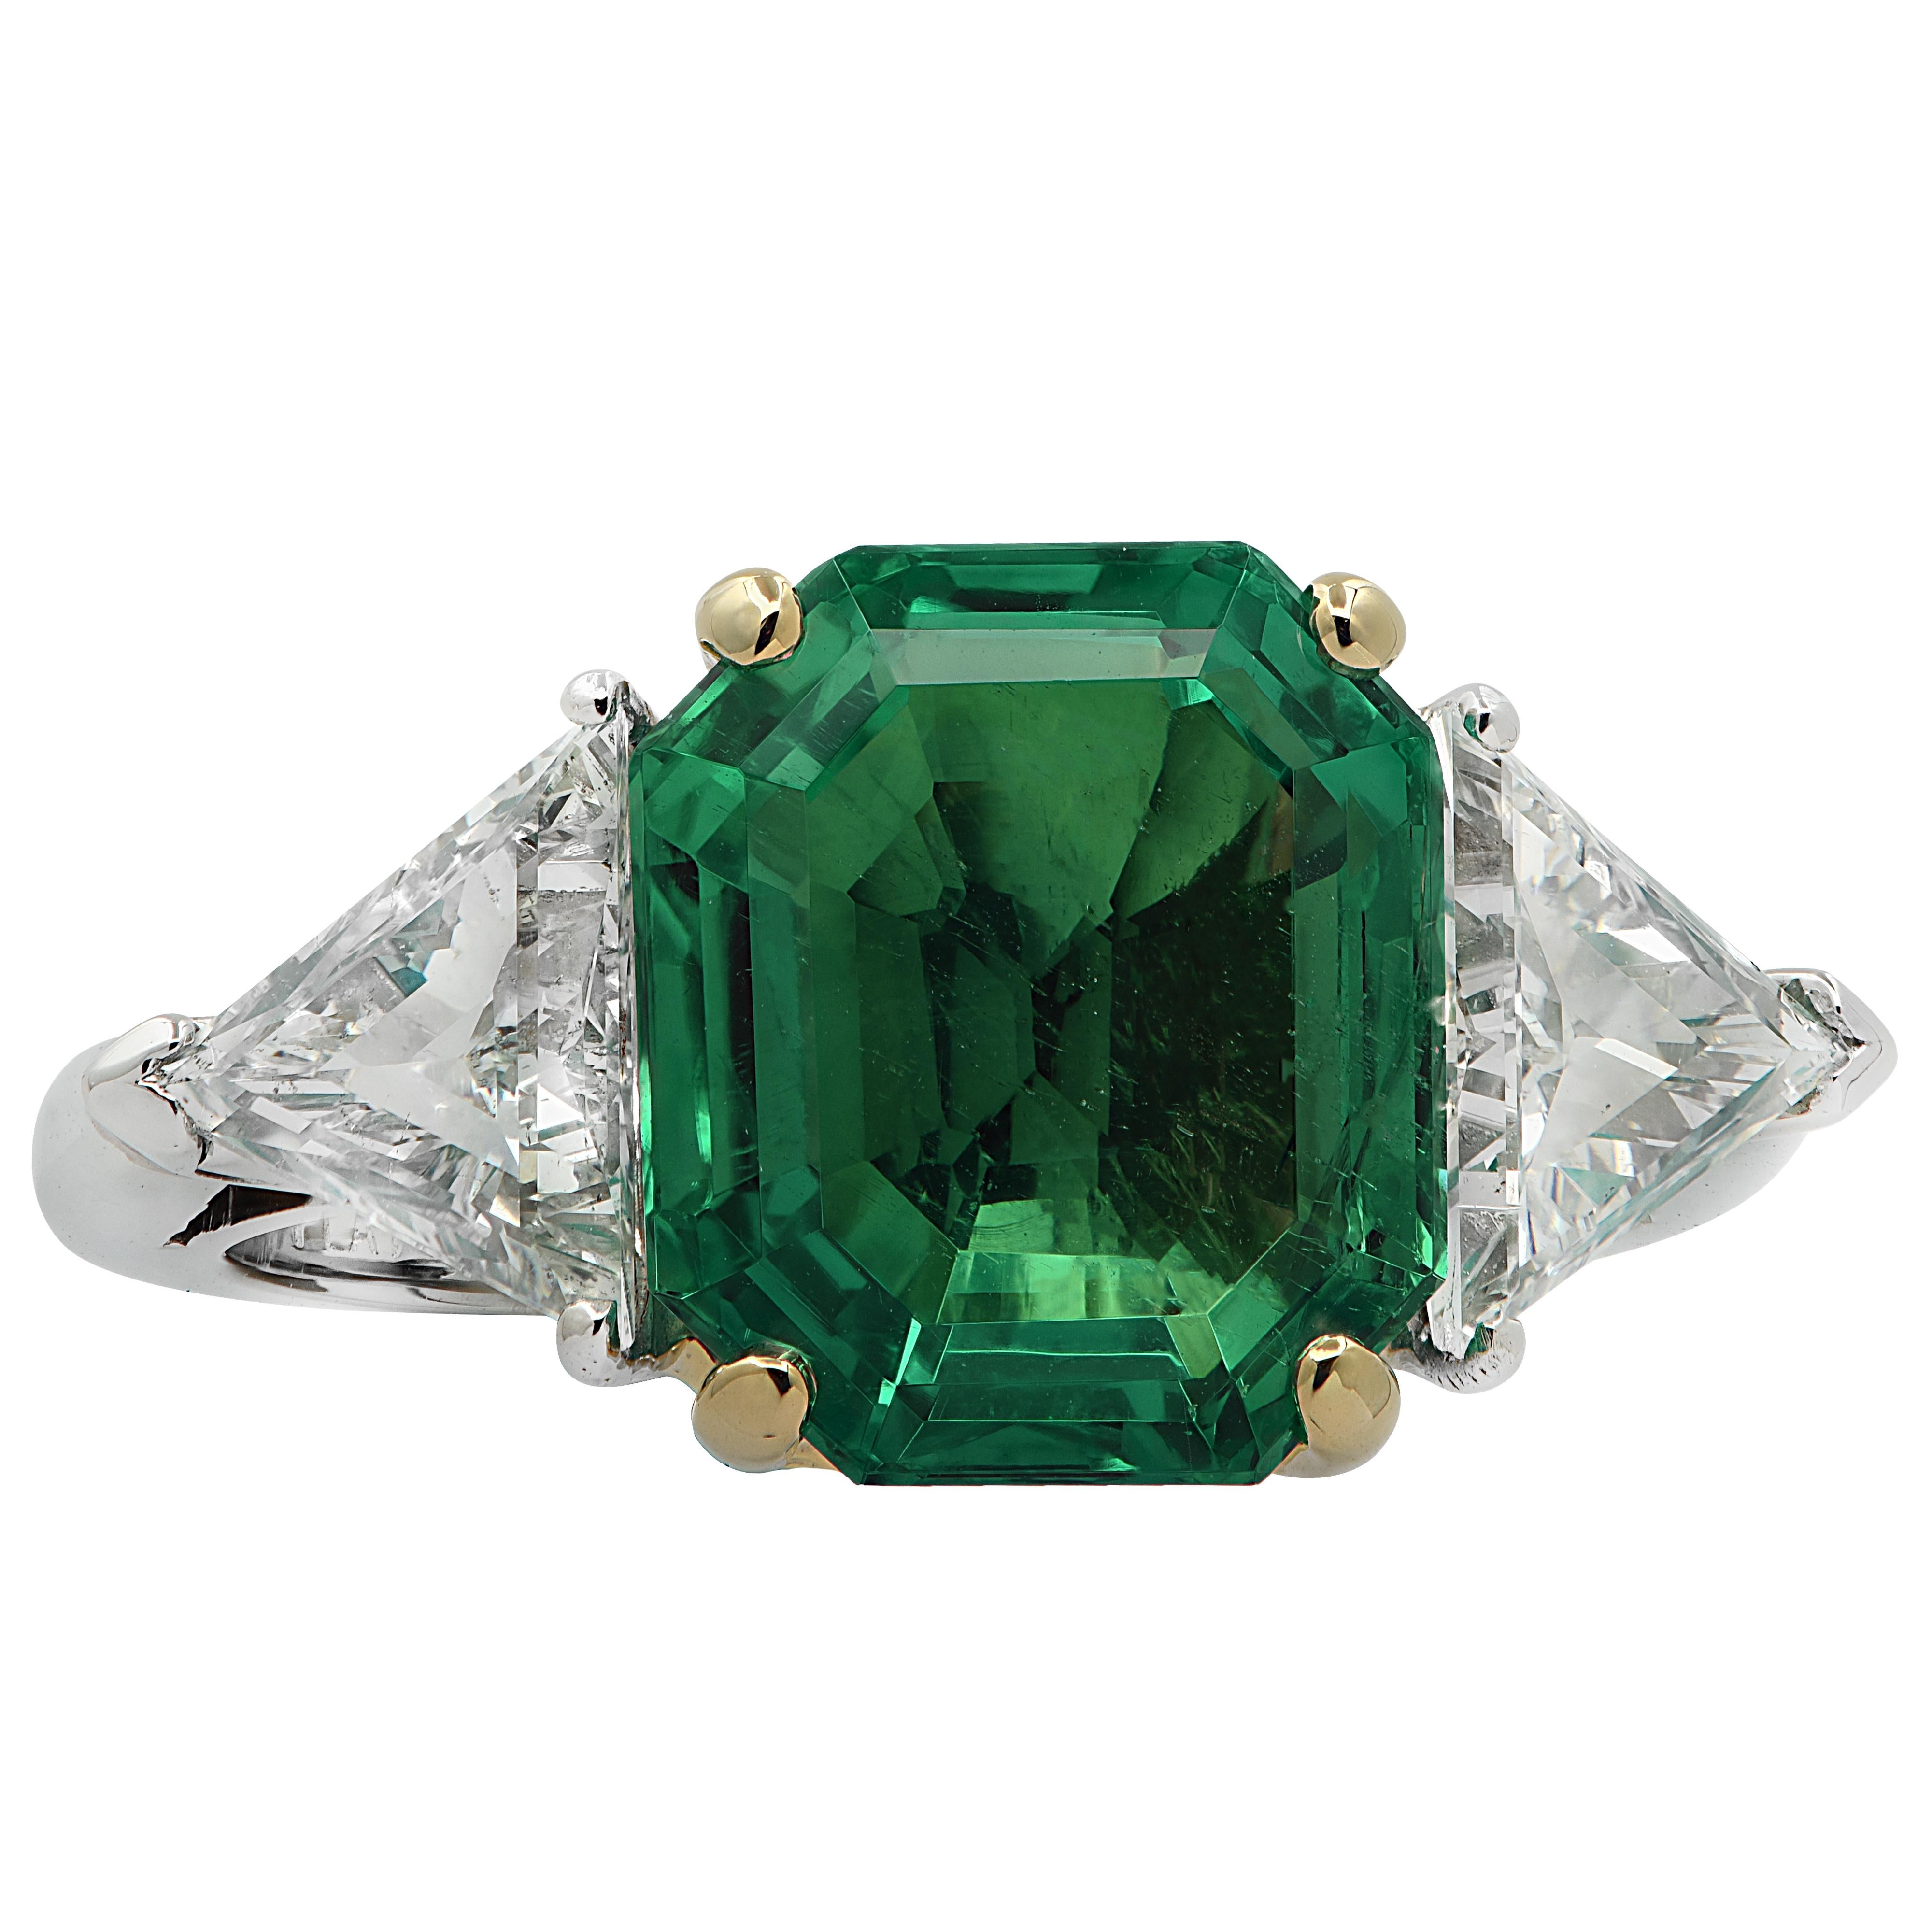 Modern Vivid Diamonds AGL Certified 4.98 Carat Emerald Cut Emerald Ring